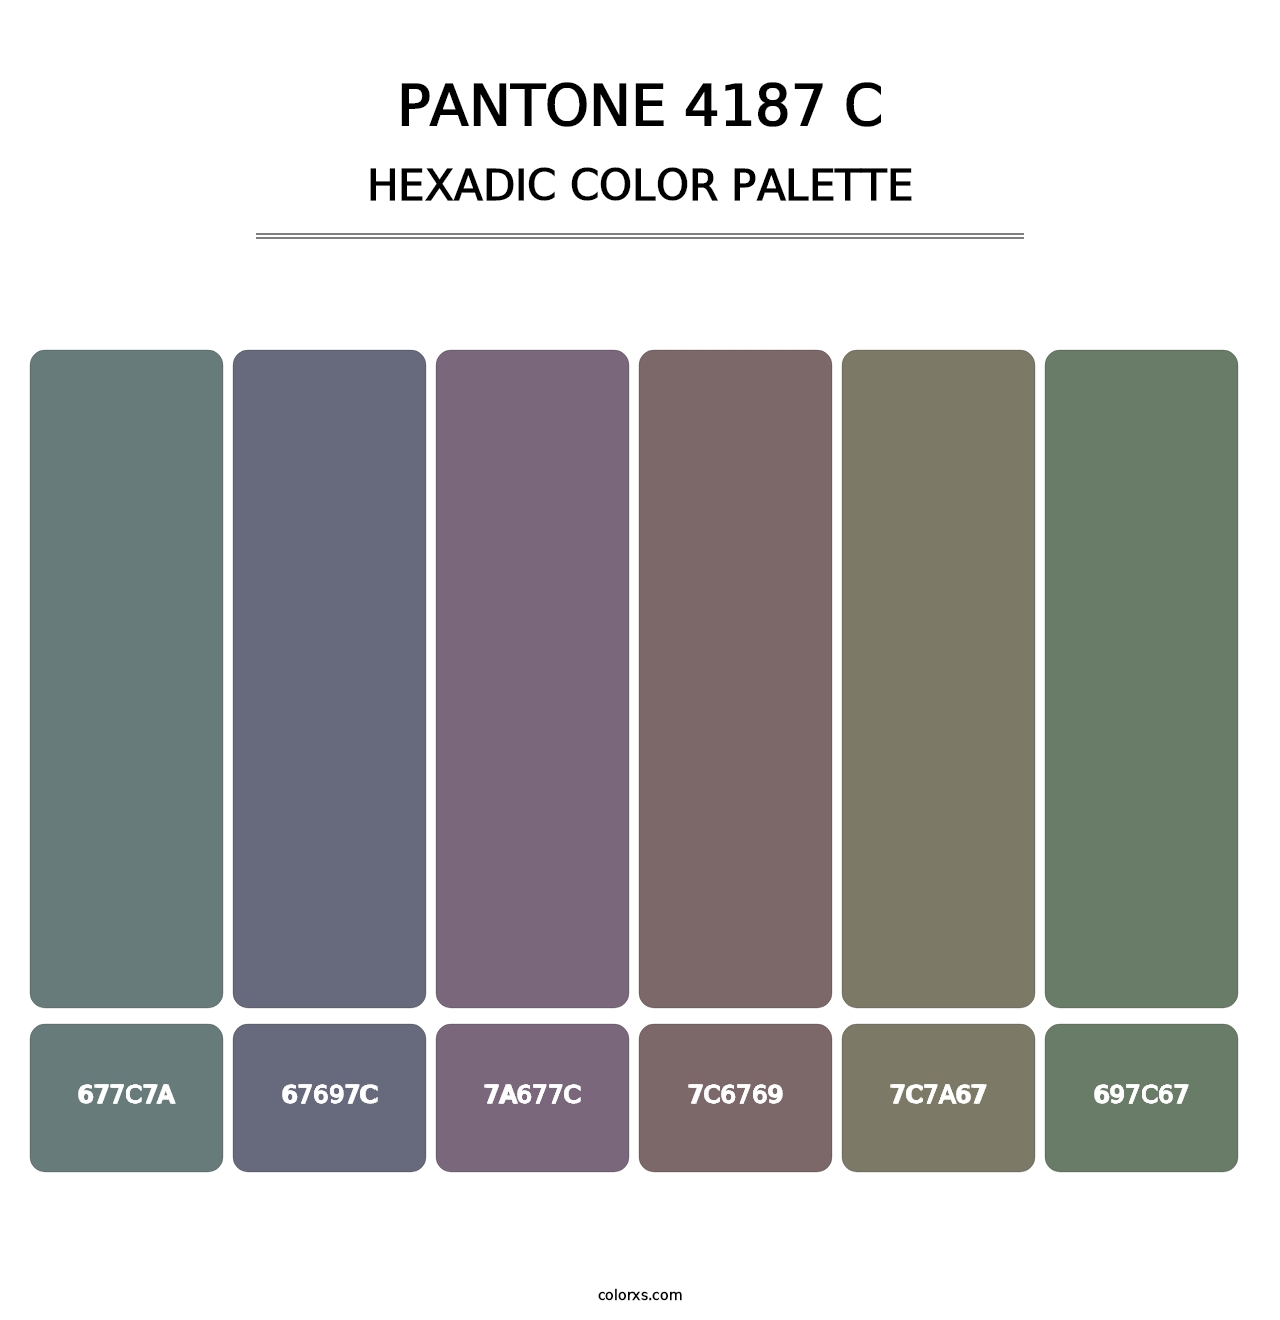 PANTONE 4187 C - Hexadic Color Palette